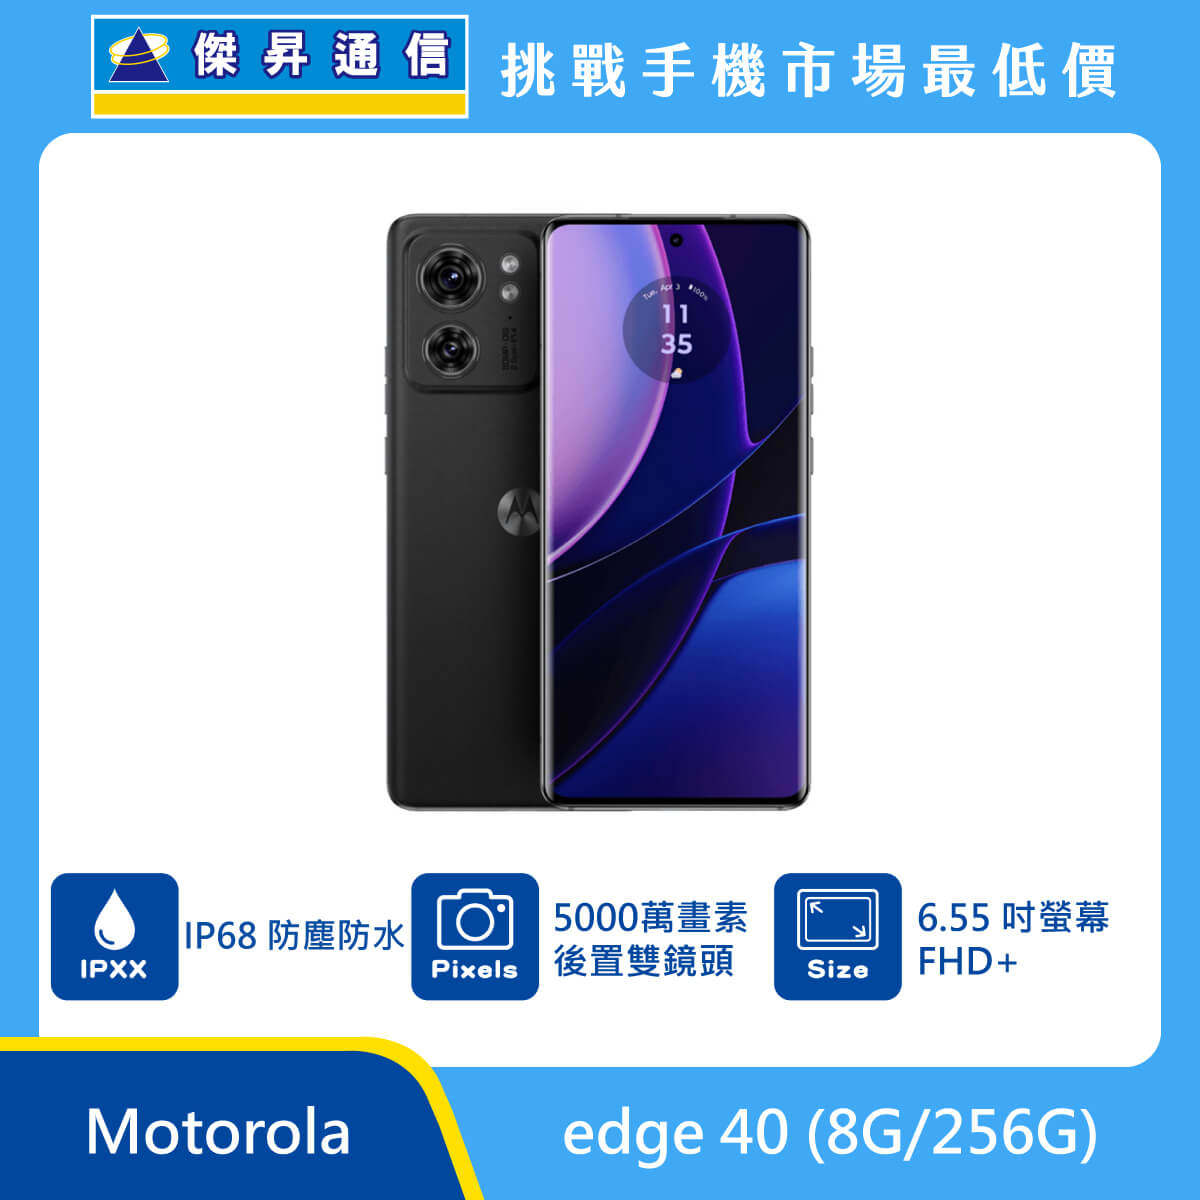 Motorola edge 40 (8G/256G)